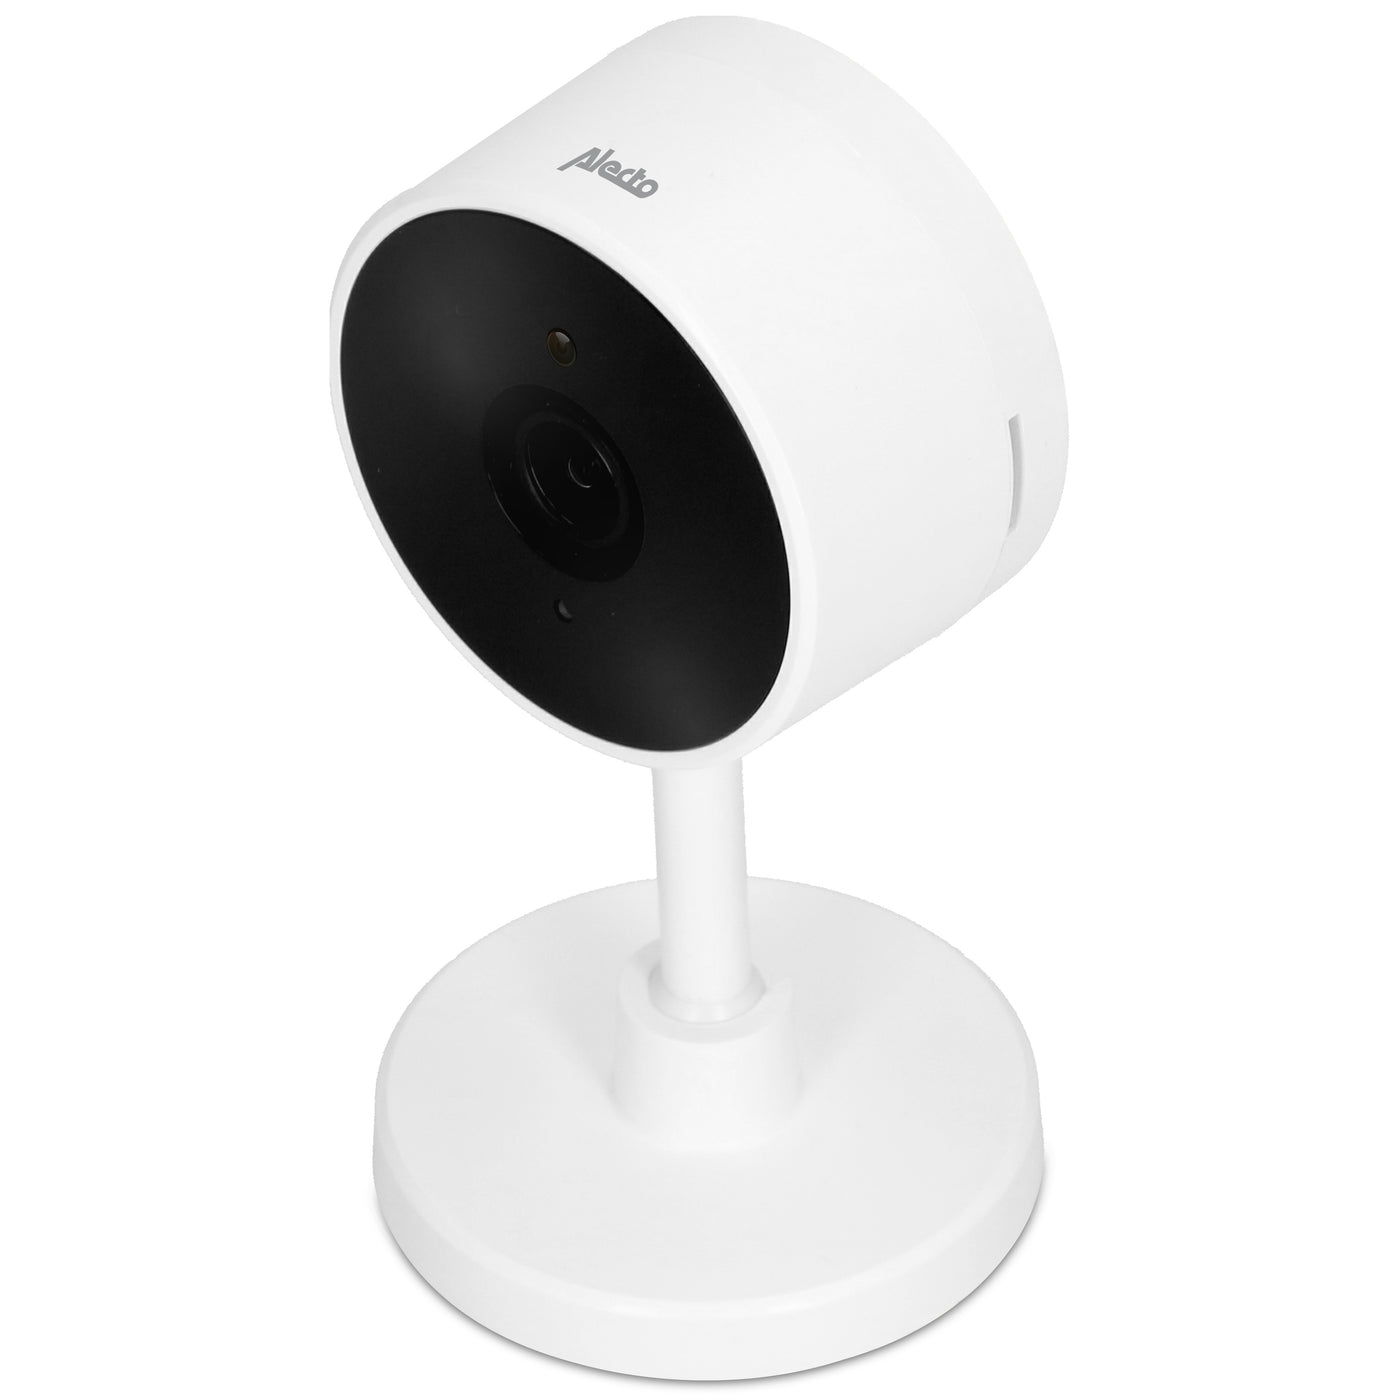 Alecto SMART-CAM10 - Caméra intelligente Wi-FI, caméra IP pour usage domotiquehe